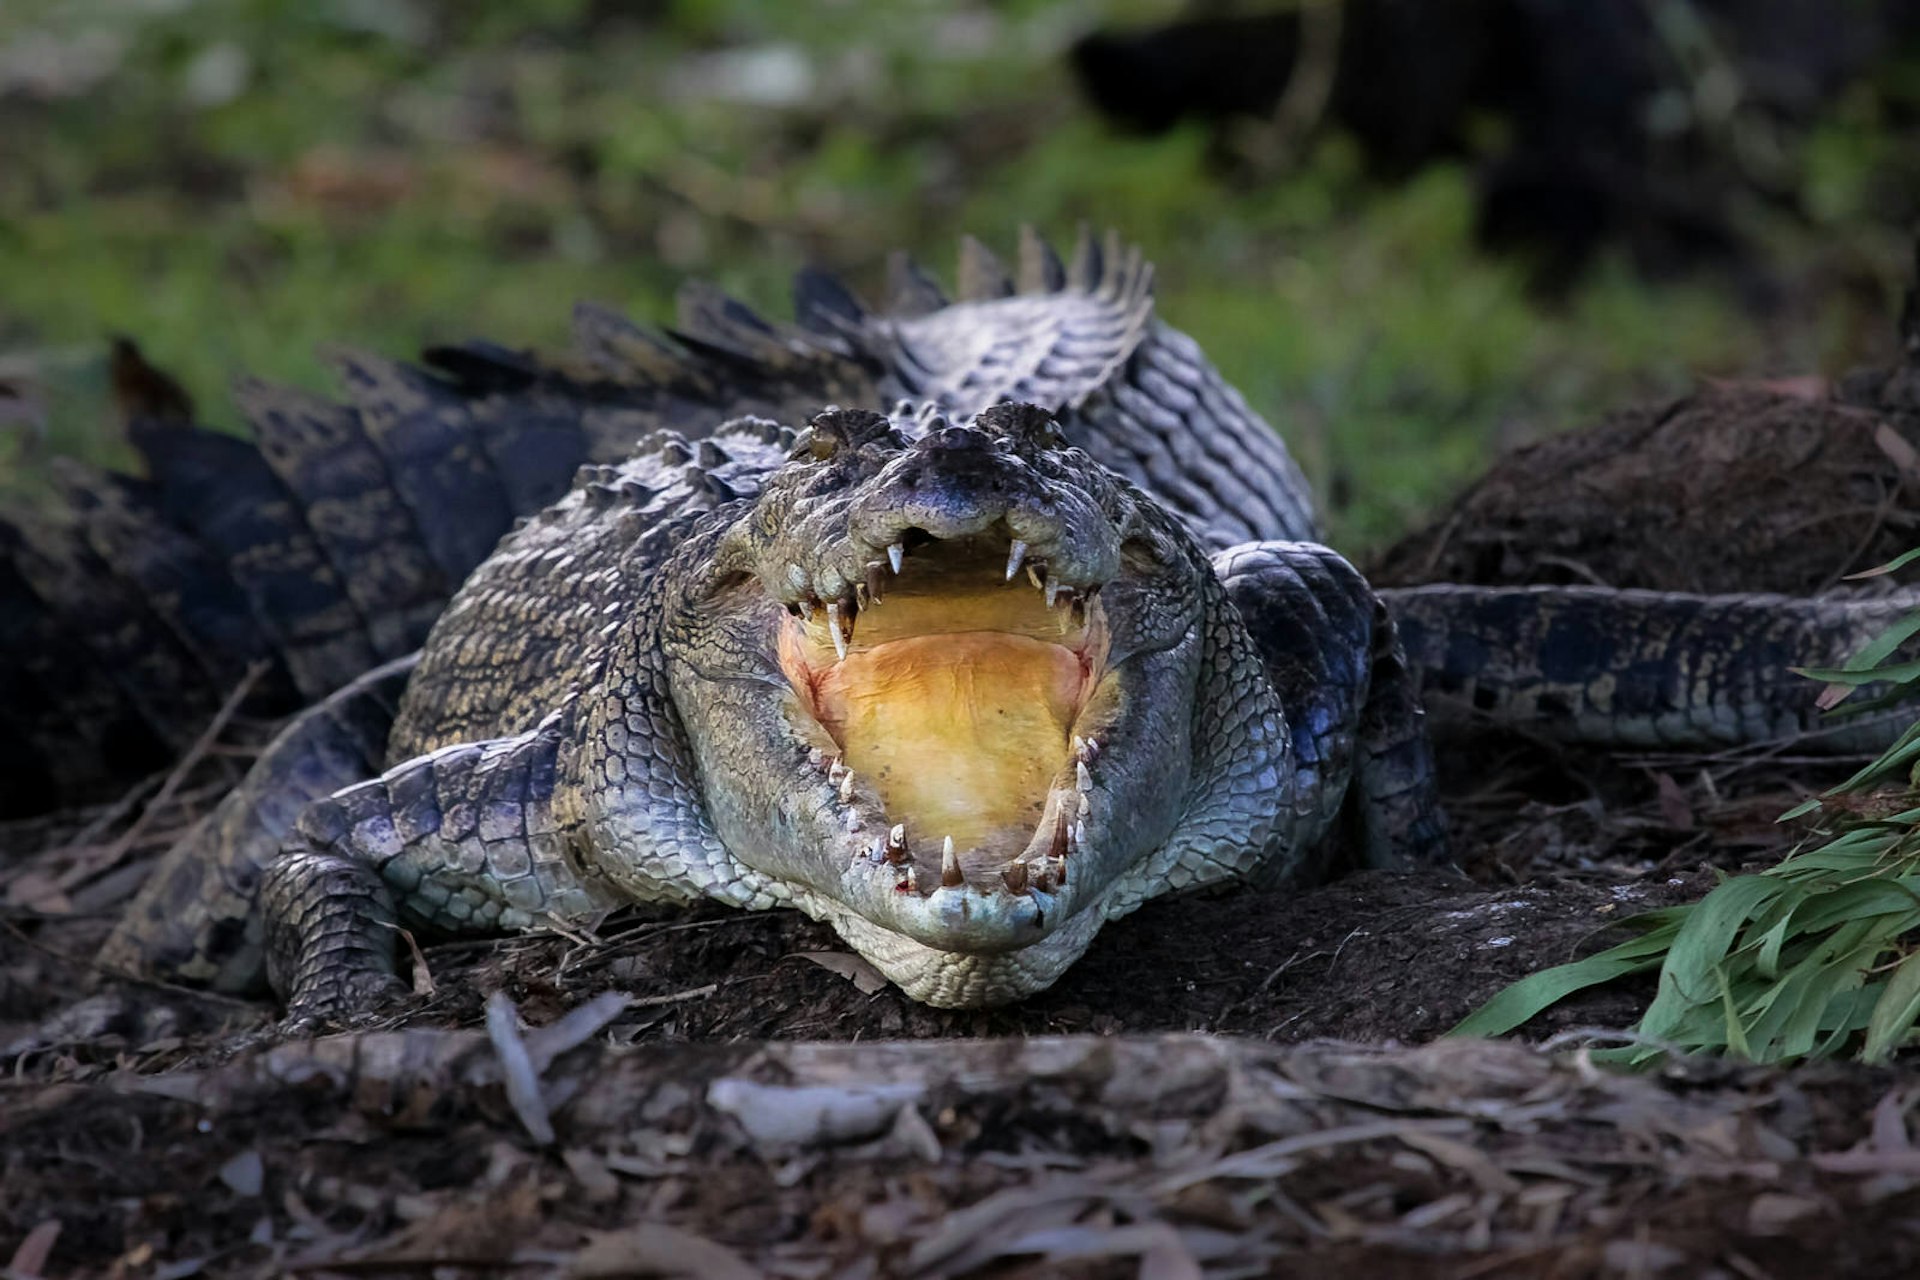 Crocodile, Kakadu National Park, Australia © Bildagentur Zoonar GmbH / Shutterstock